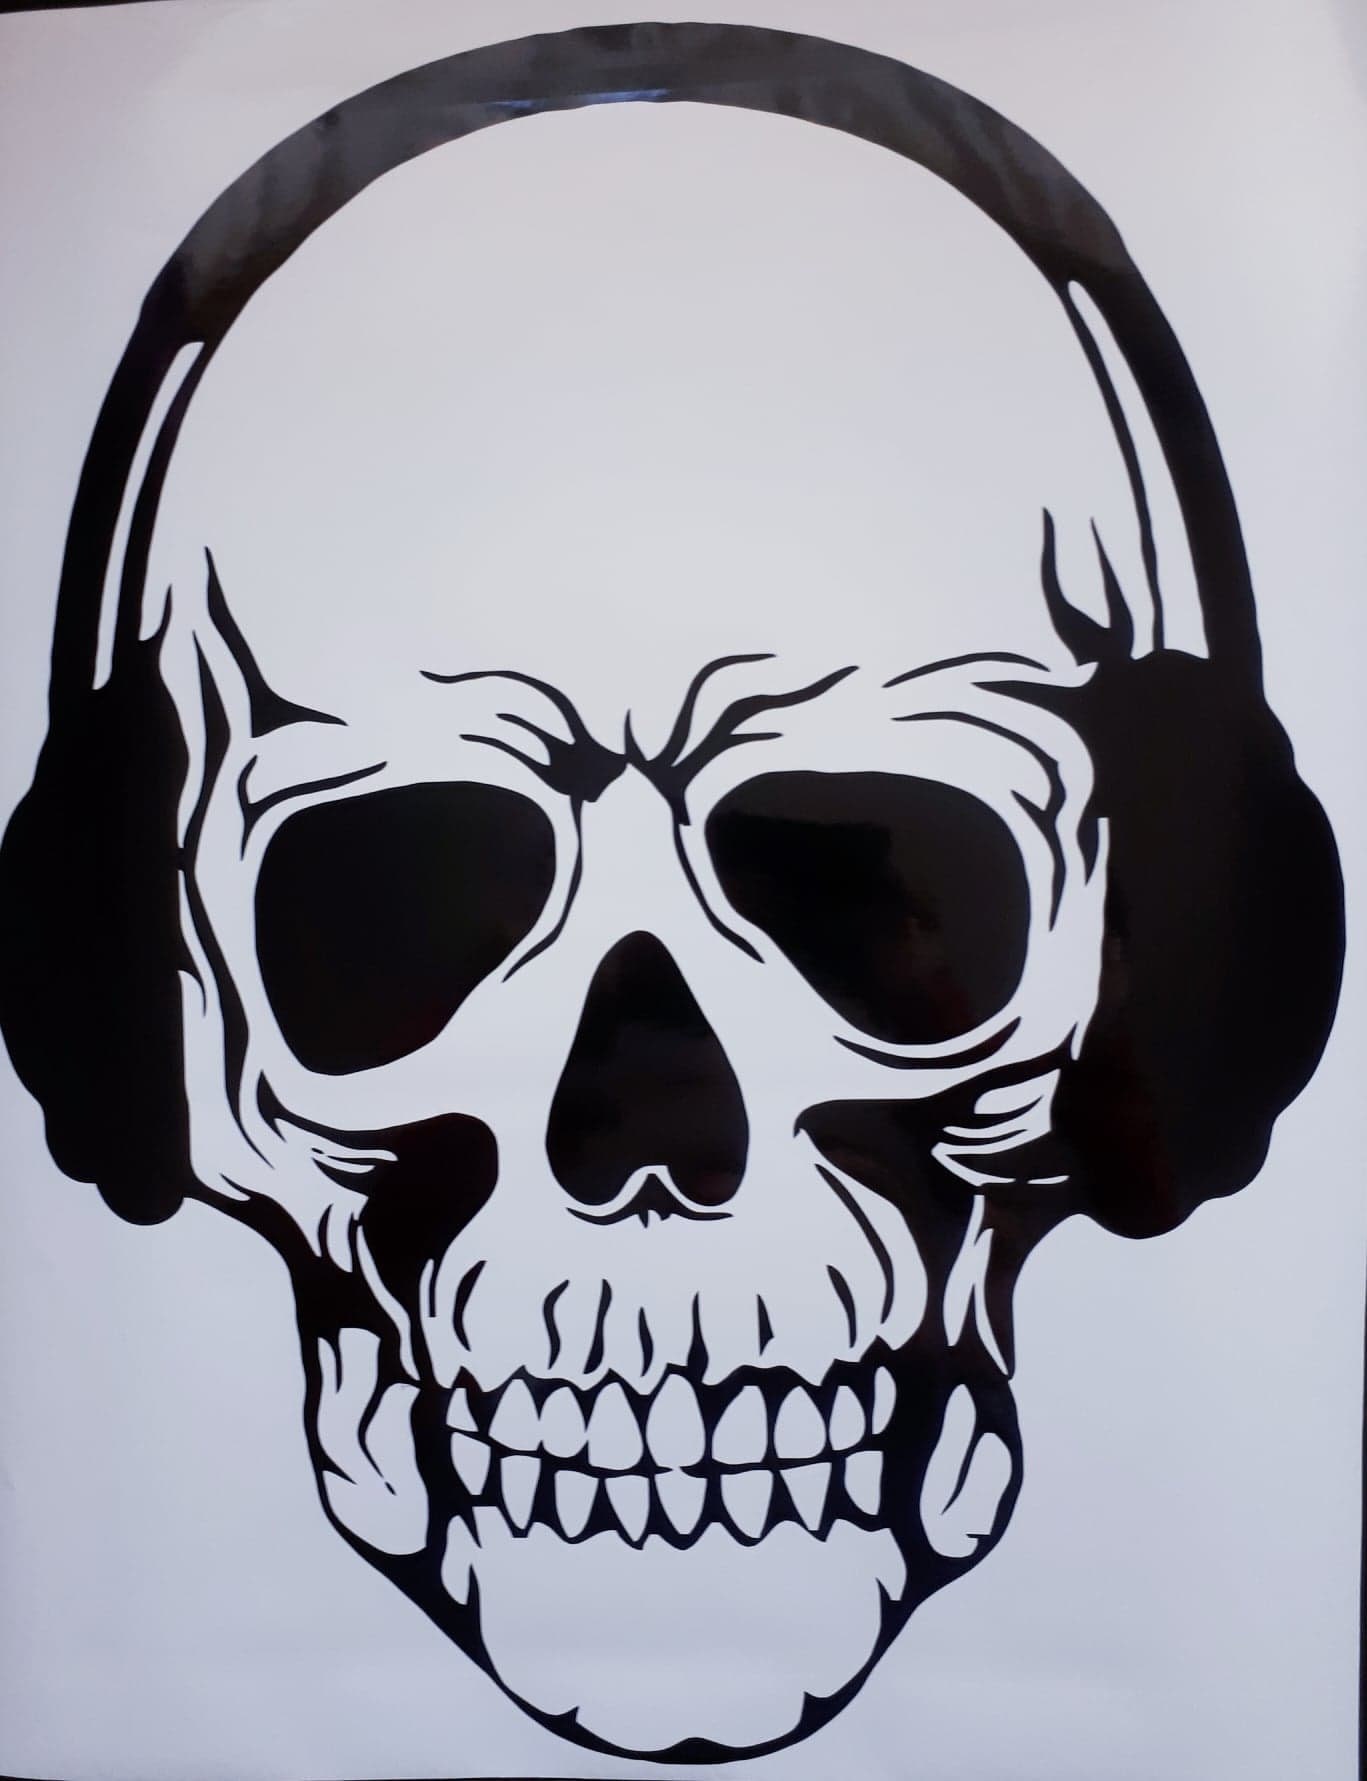 Sticker Mural Tête de mort rasta - Autocollant Intérieur Tête de mort rasta